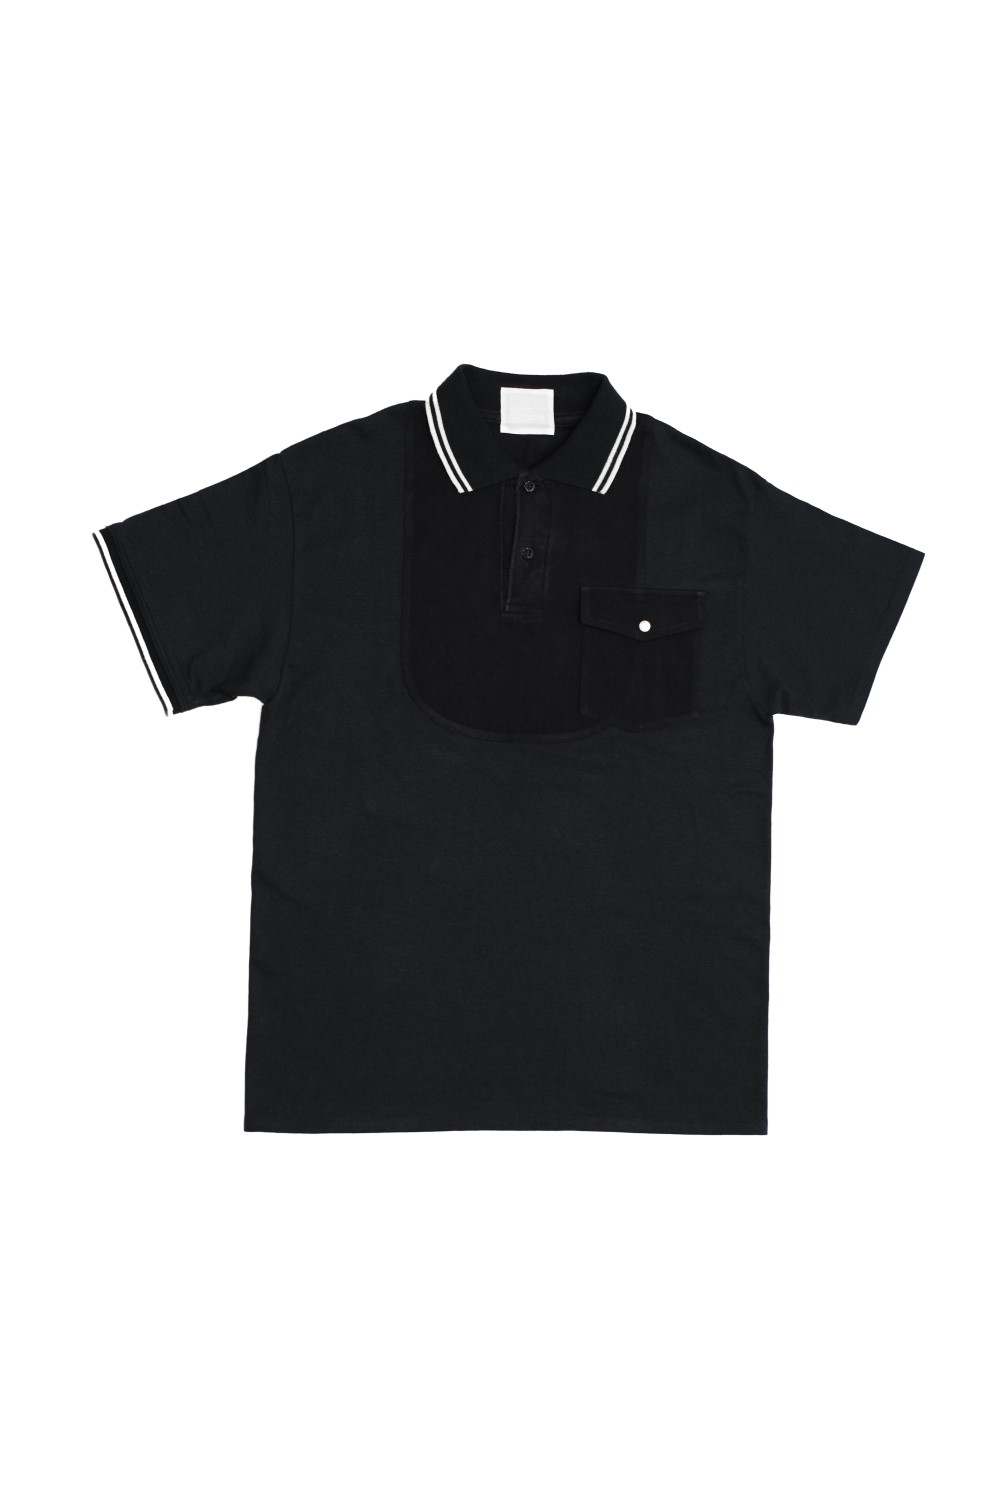 remale polo shirt black